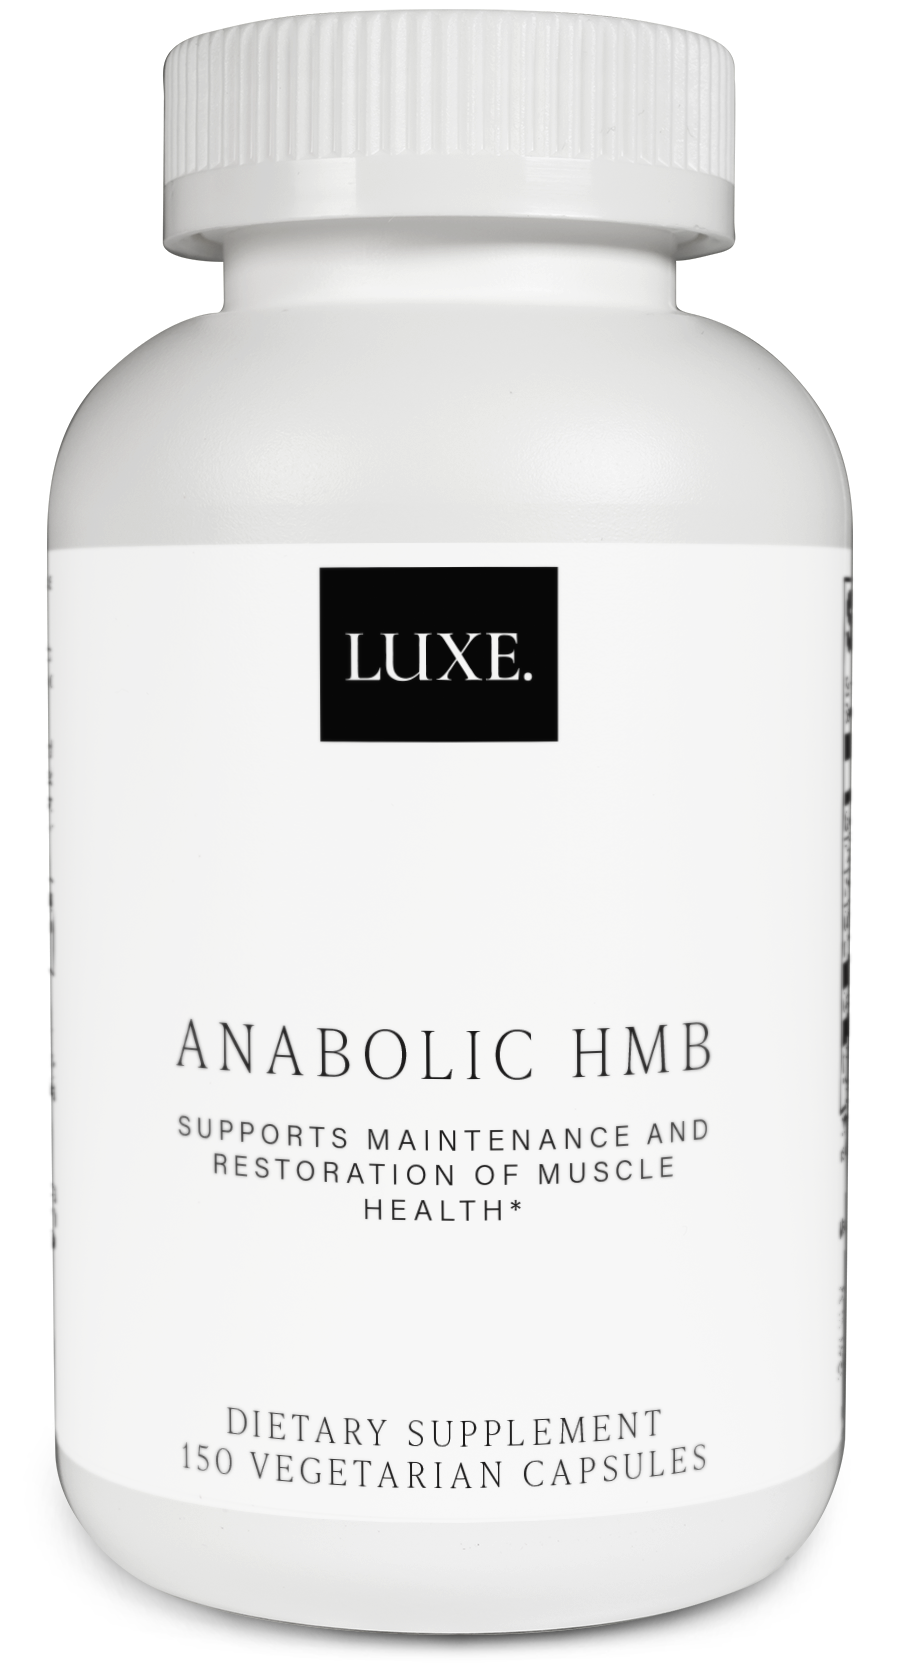 LUXE., Anabolic HMB